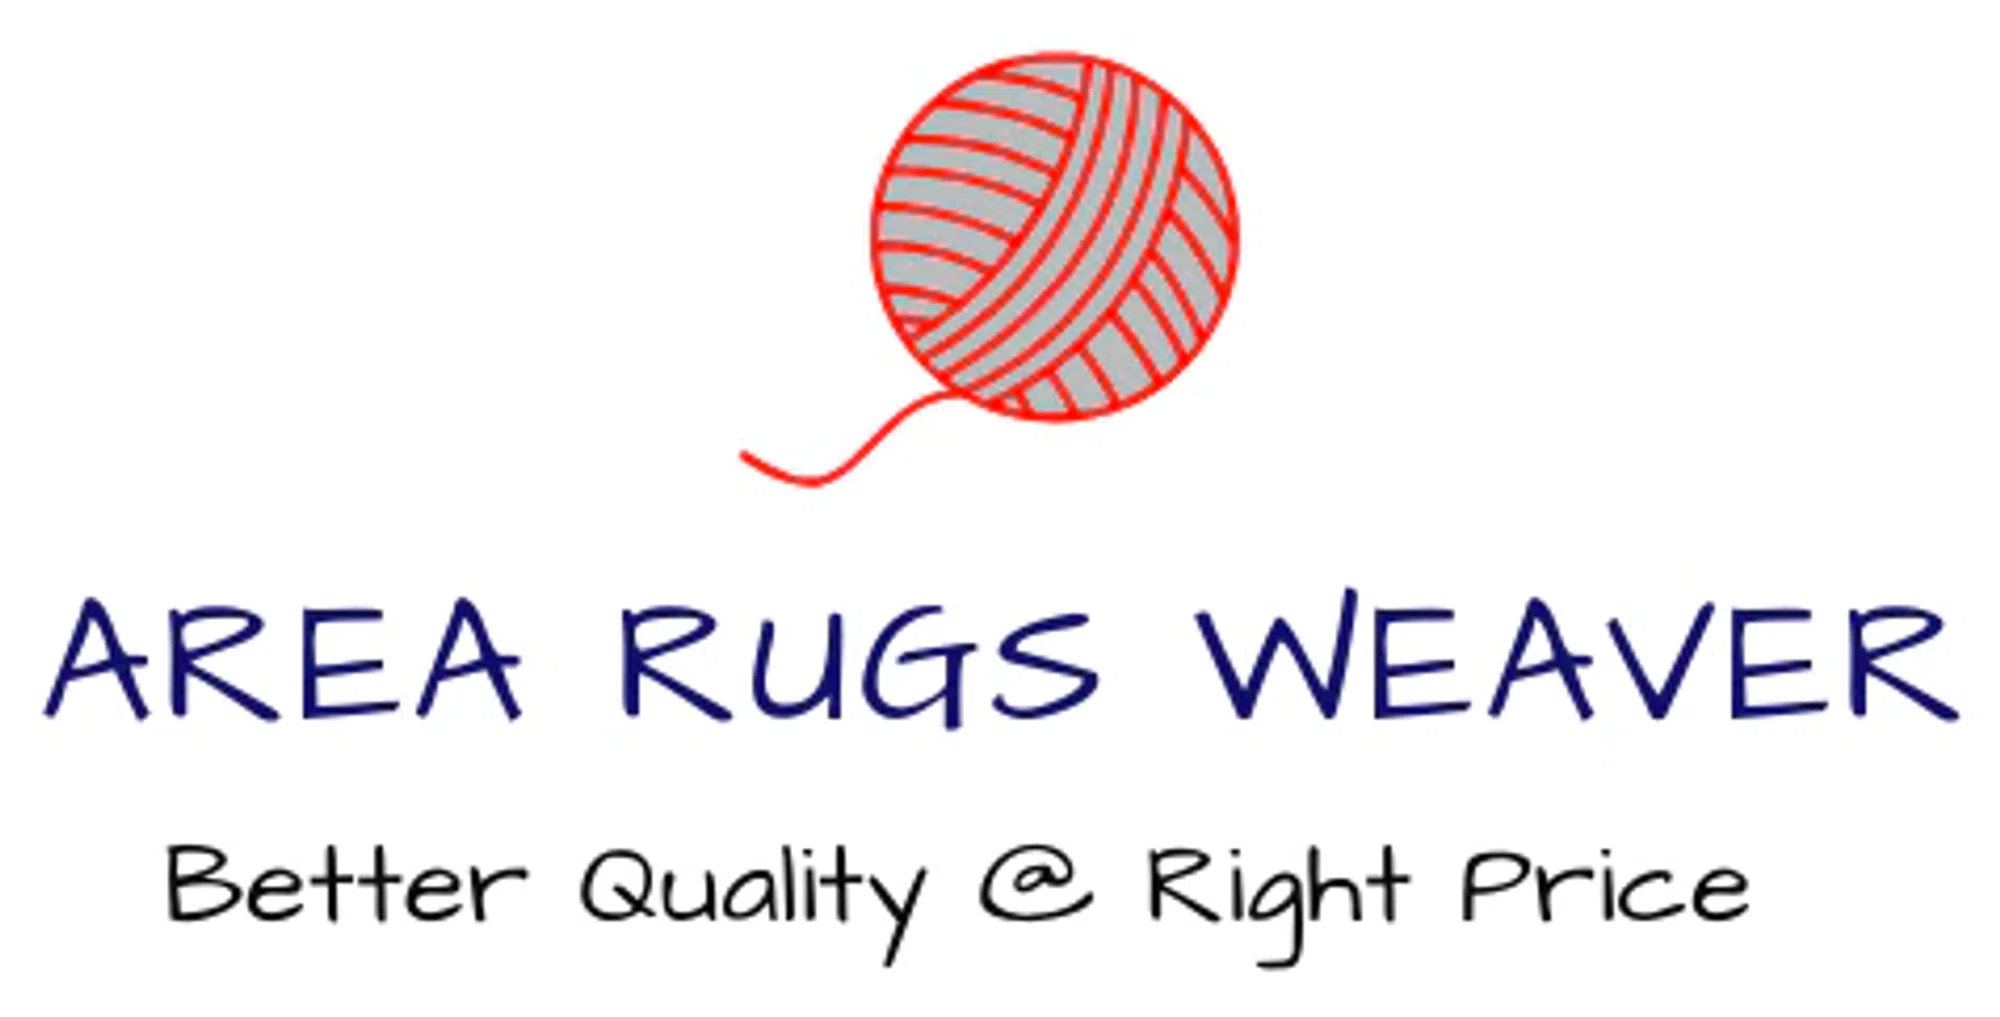 Area Rugs Weaver